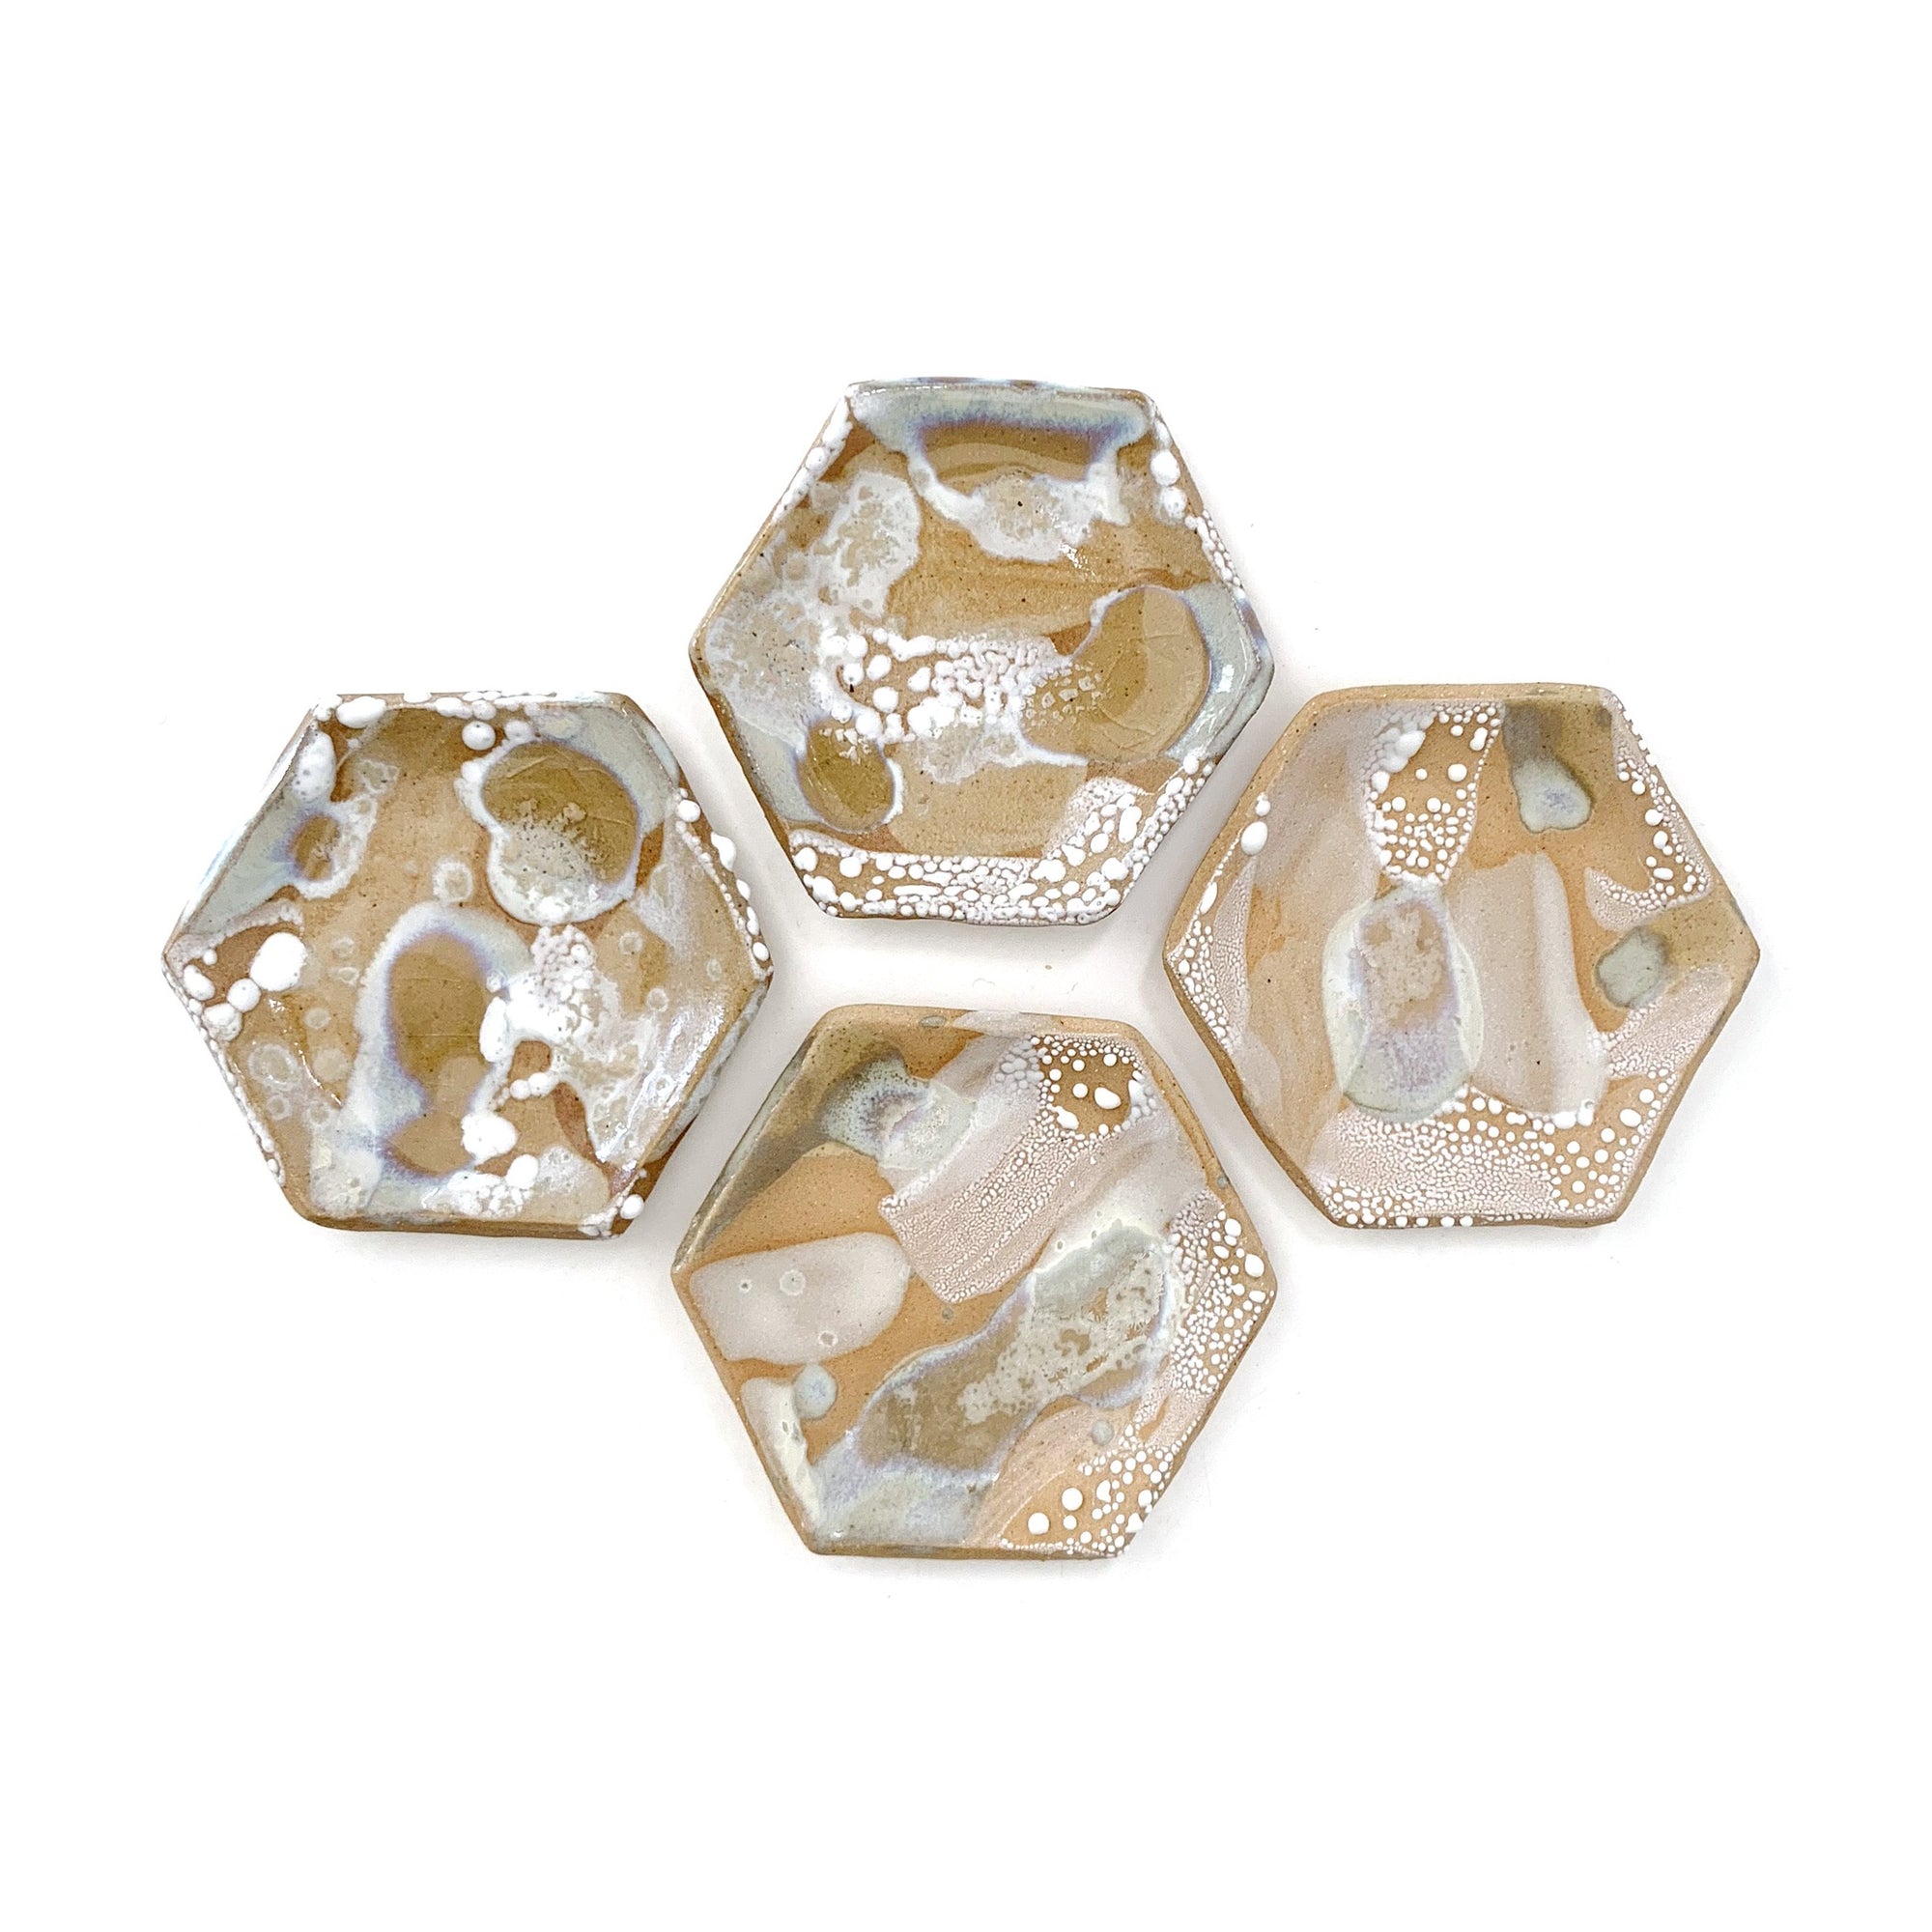 Golden and White Hexagonal Ring Dish